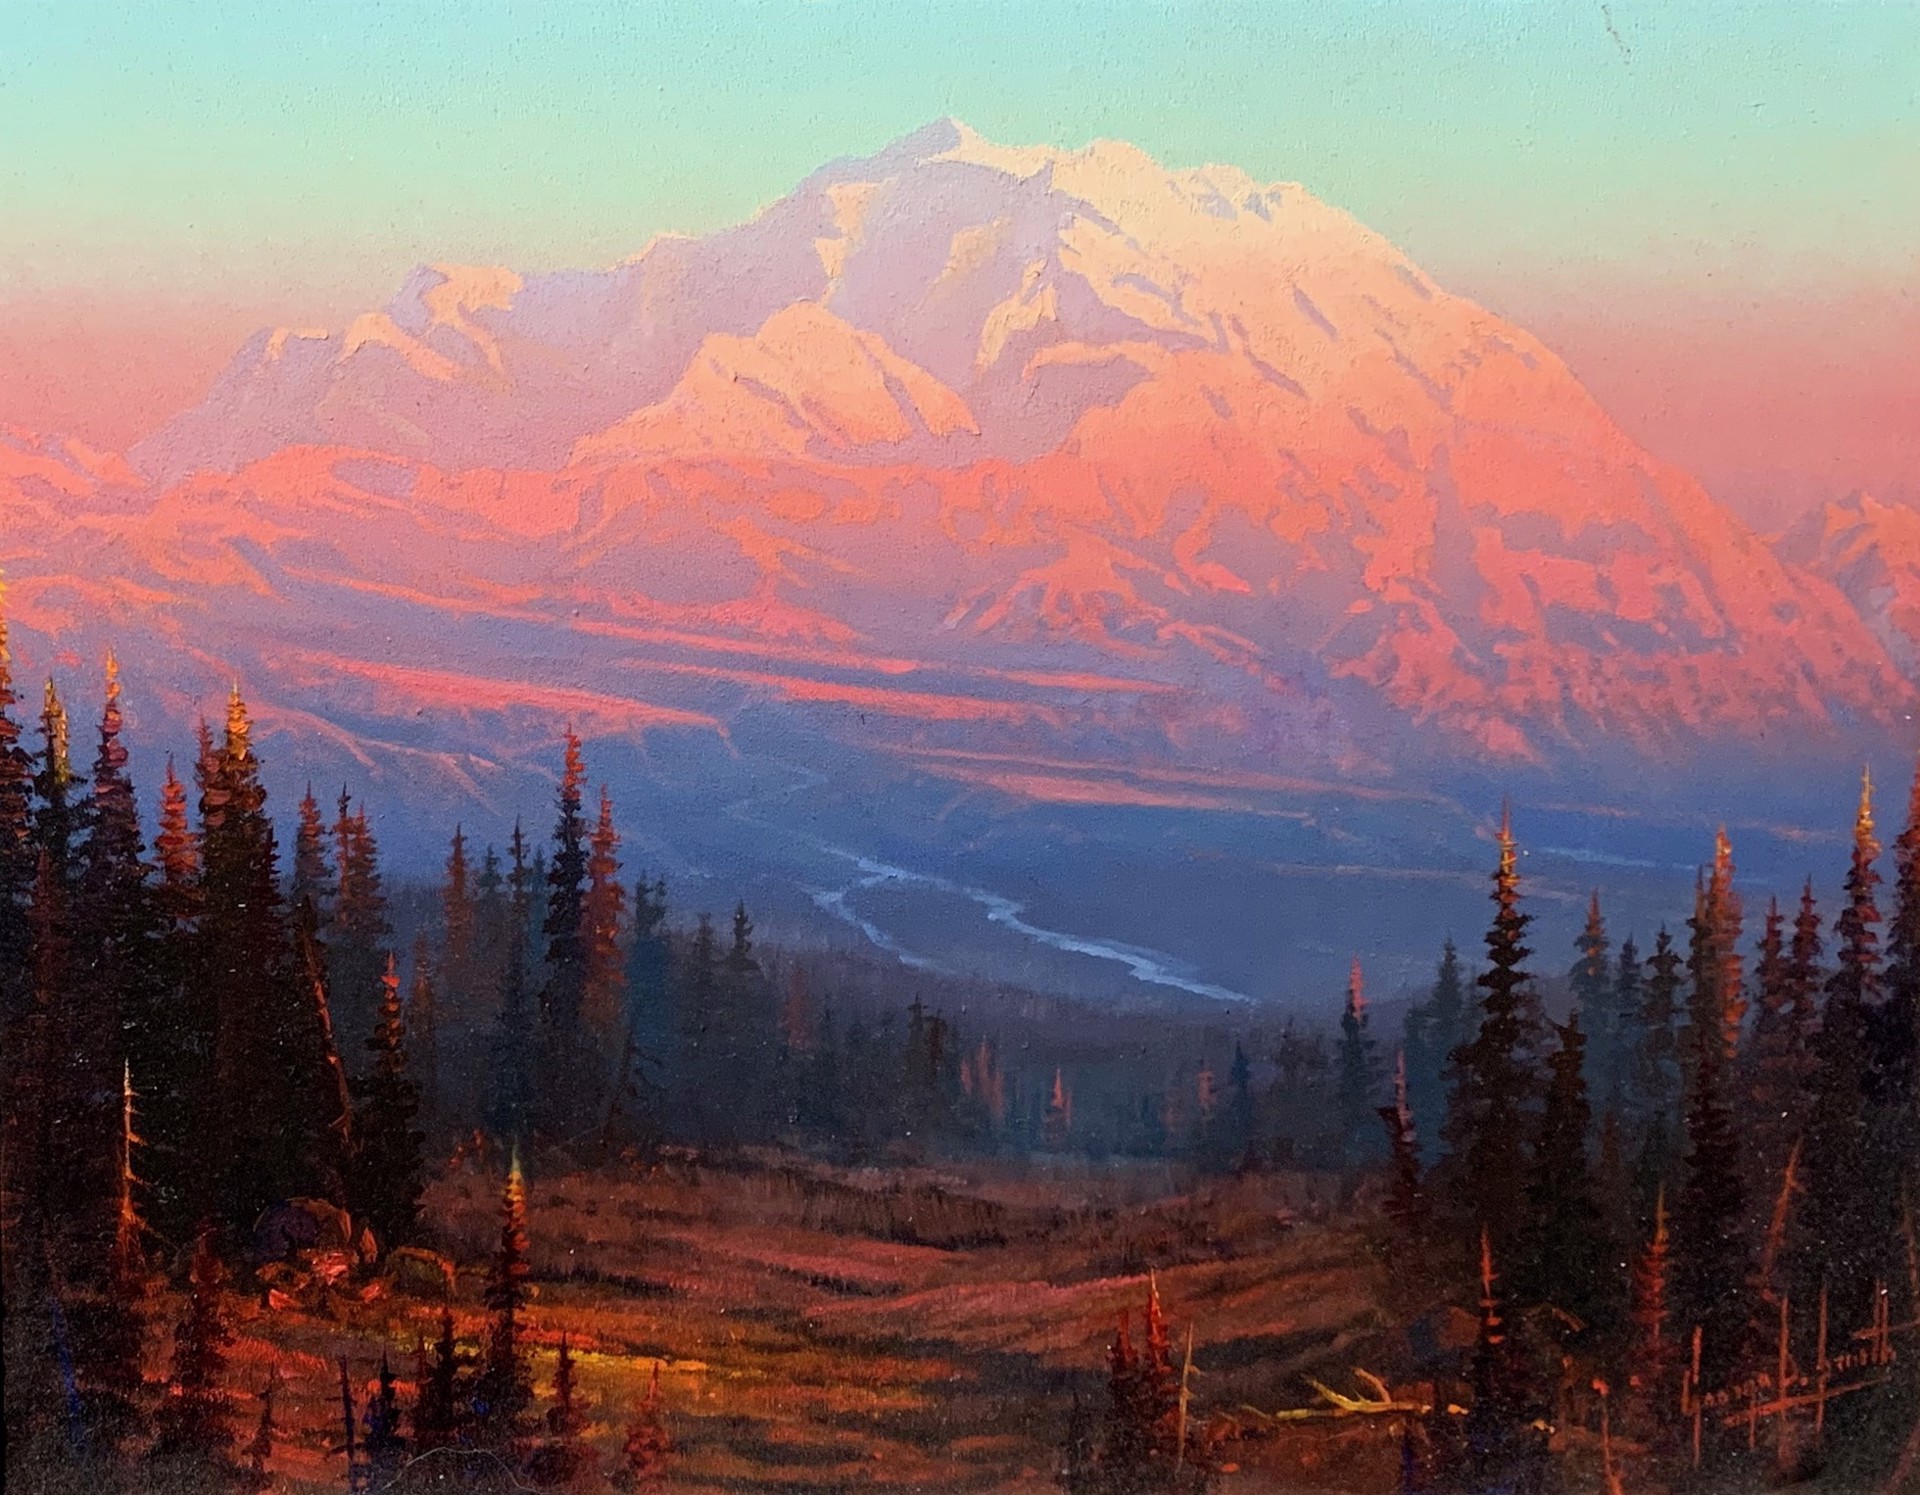 DENALI - ALASKA RANGE by George "Dee" Smith